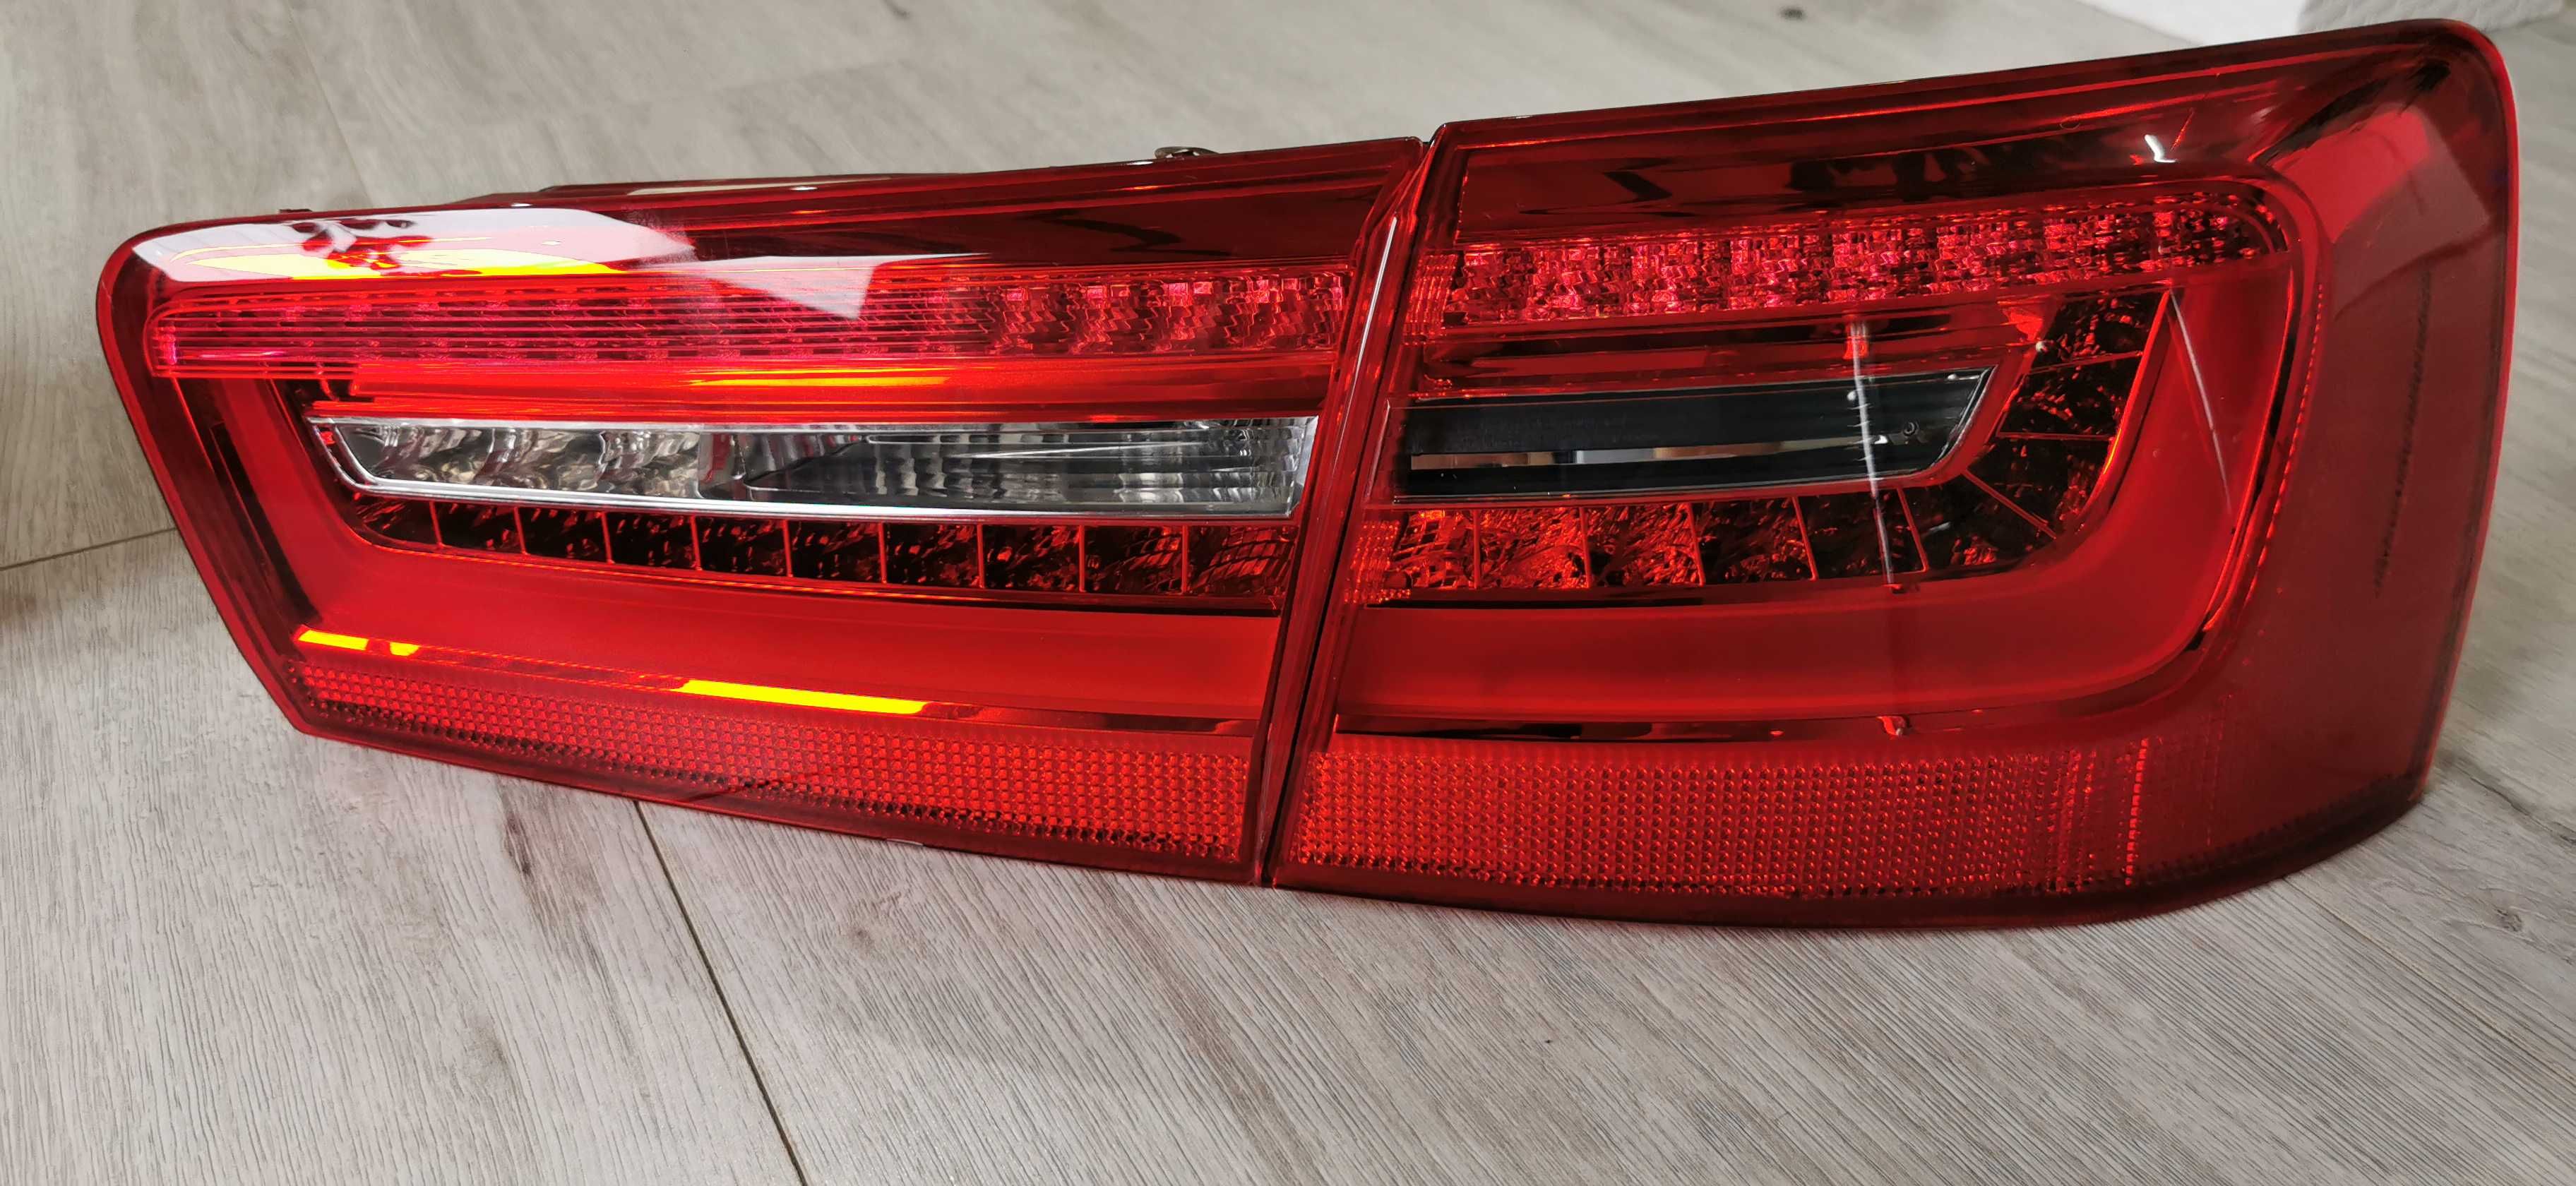 Lampy tył Audi A6 C7 LED